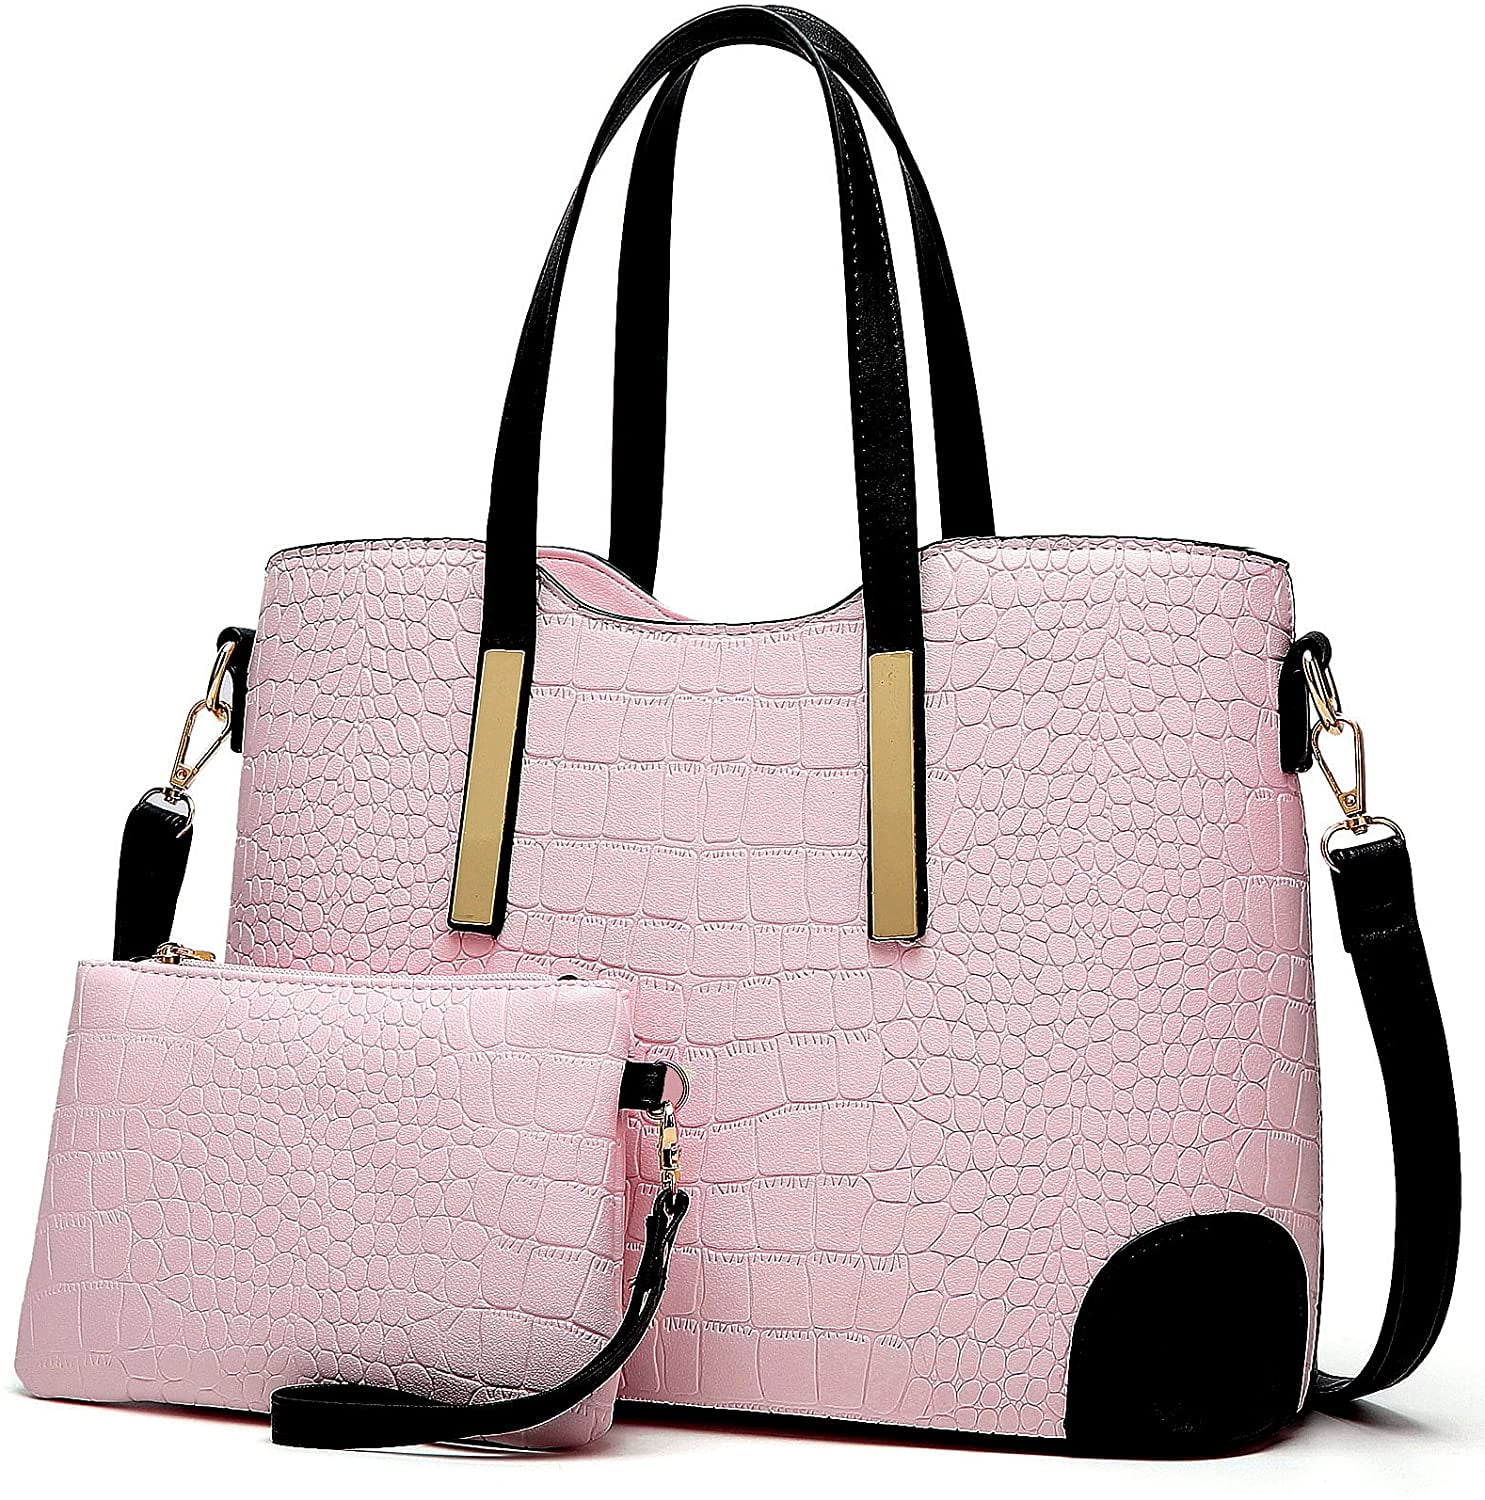 YNIQUE Satchel Purses and Handbags for Women Shoulder Tote Bags 